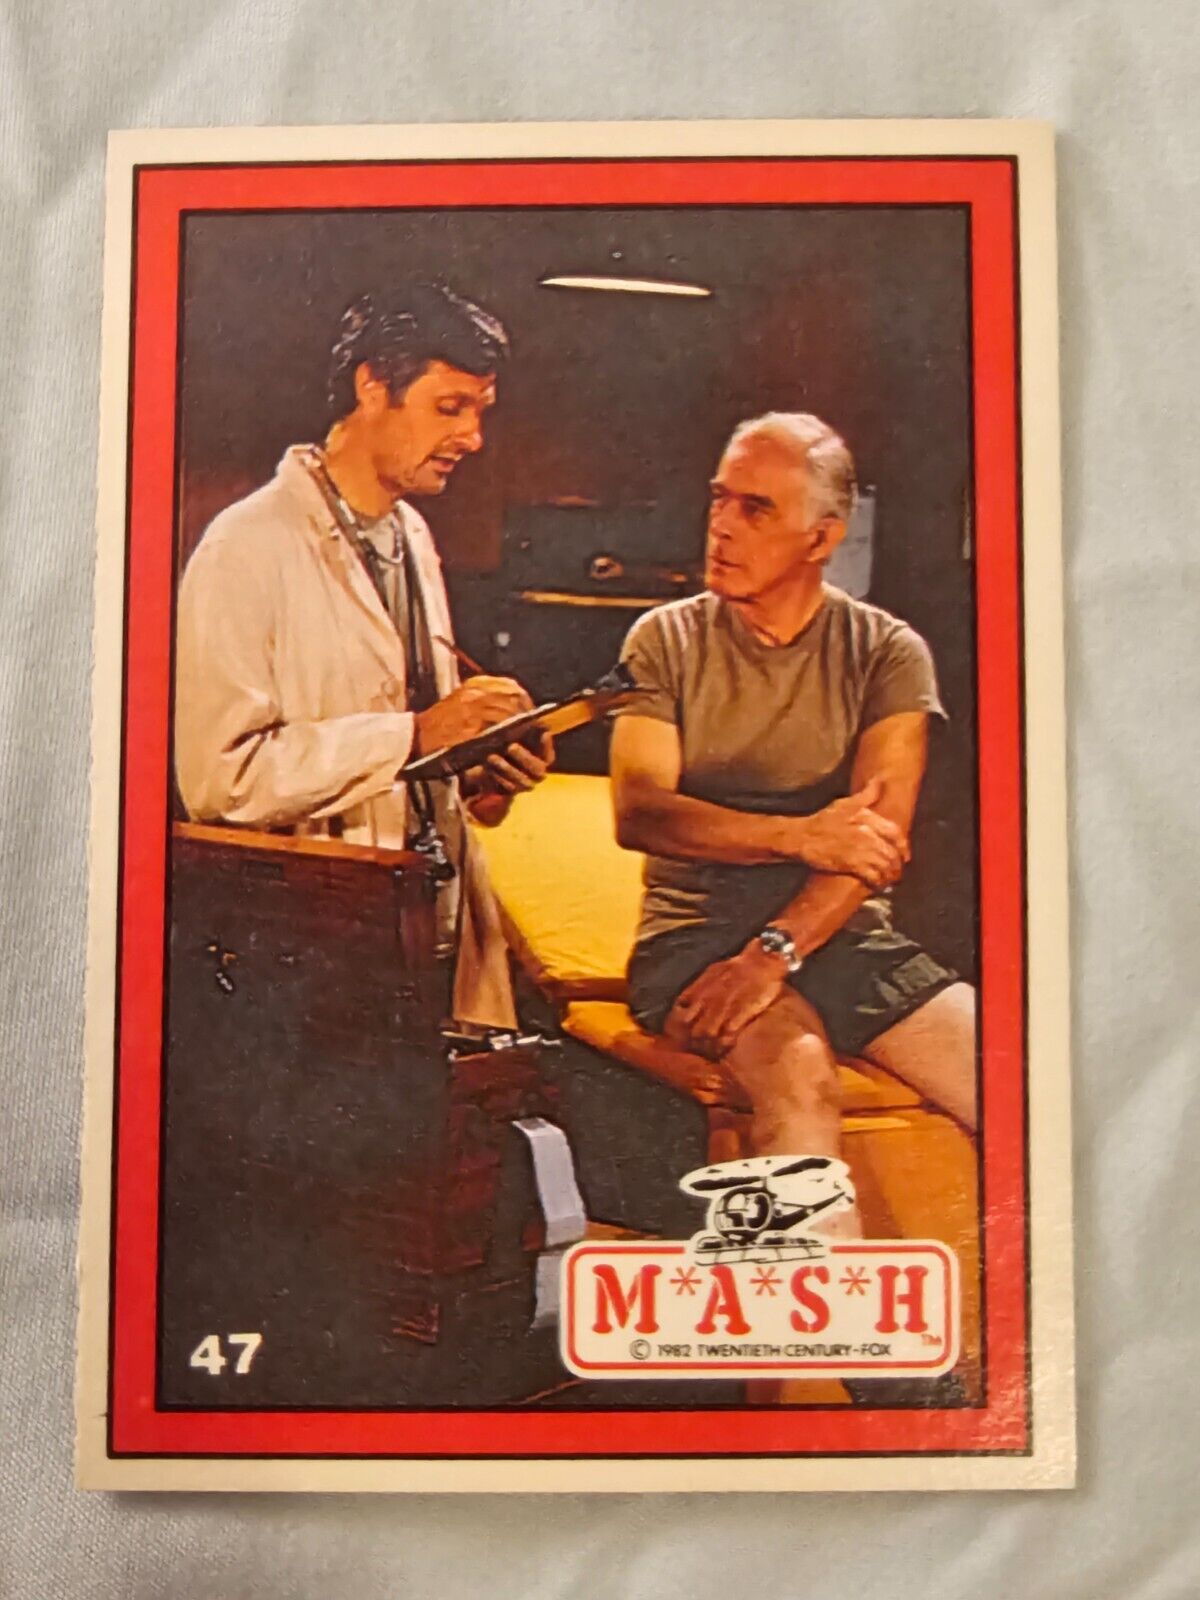 1982 Donruss MASH Trading Card #47